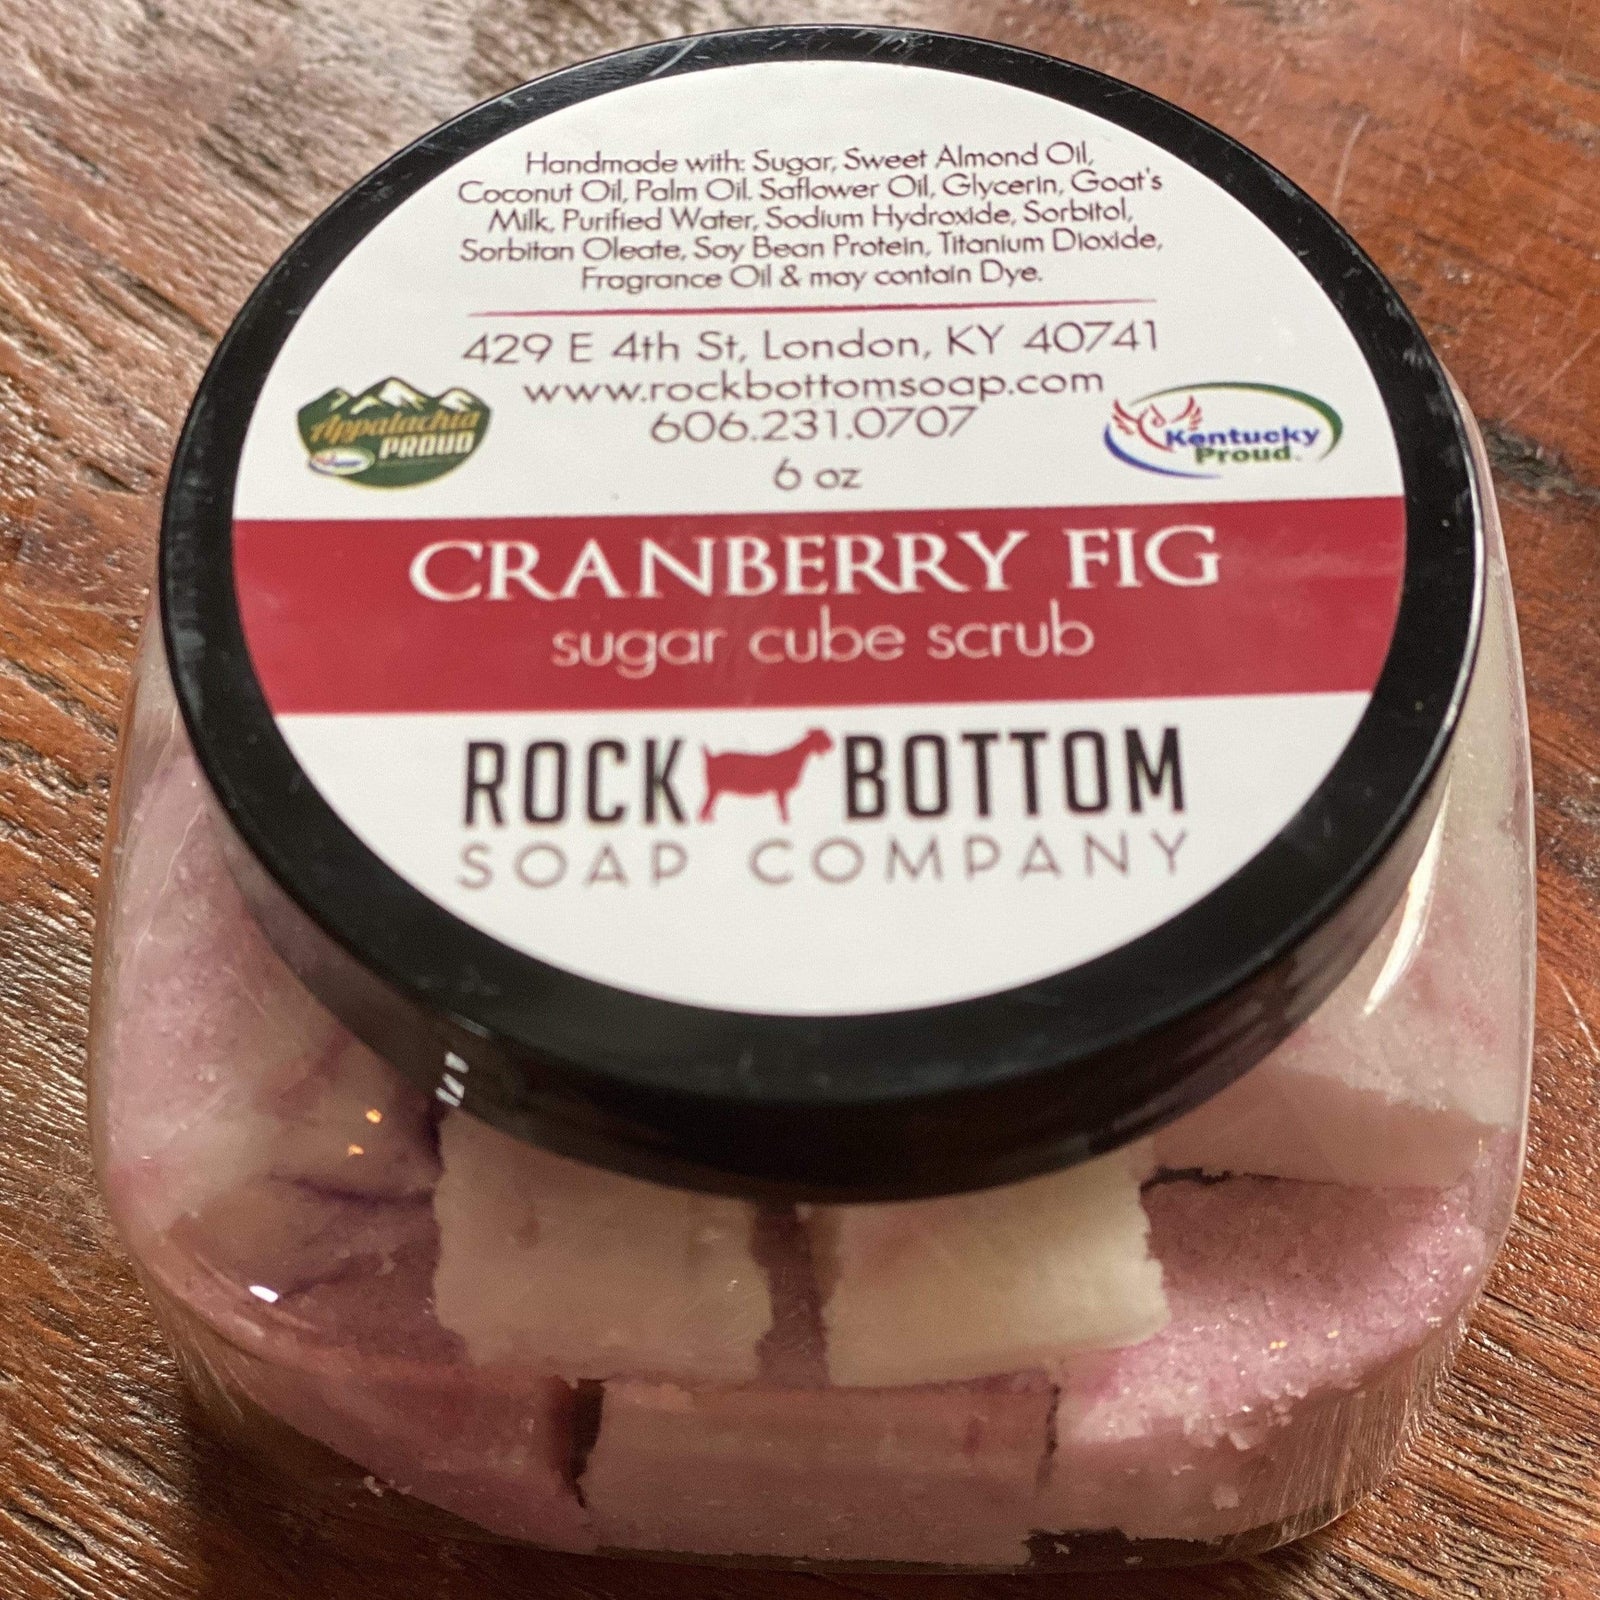 Cranberry Fig Handmade Goat Milk Sugar Cube Scrub to Exfoliate and Moisturize Skin